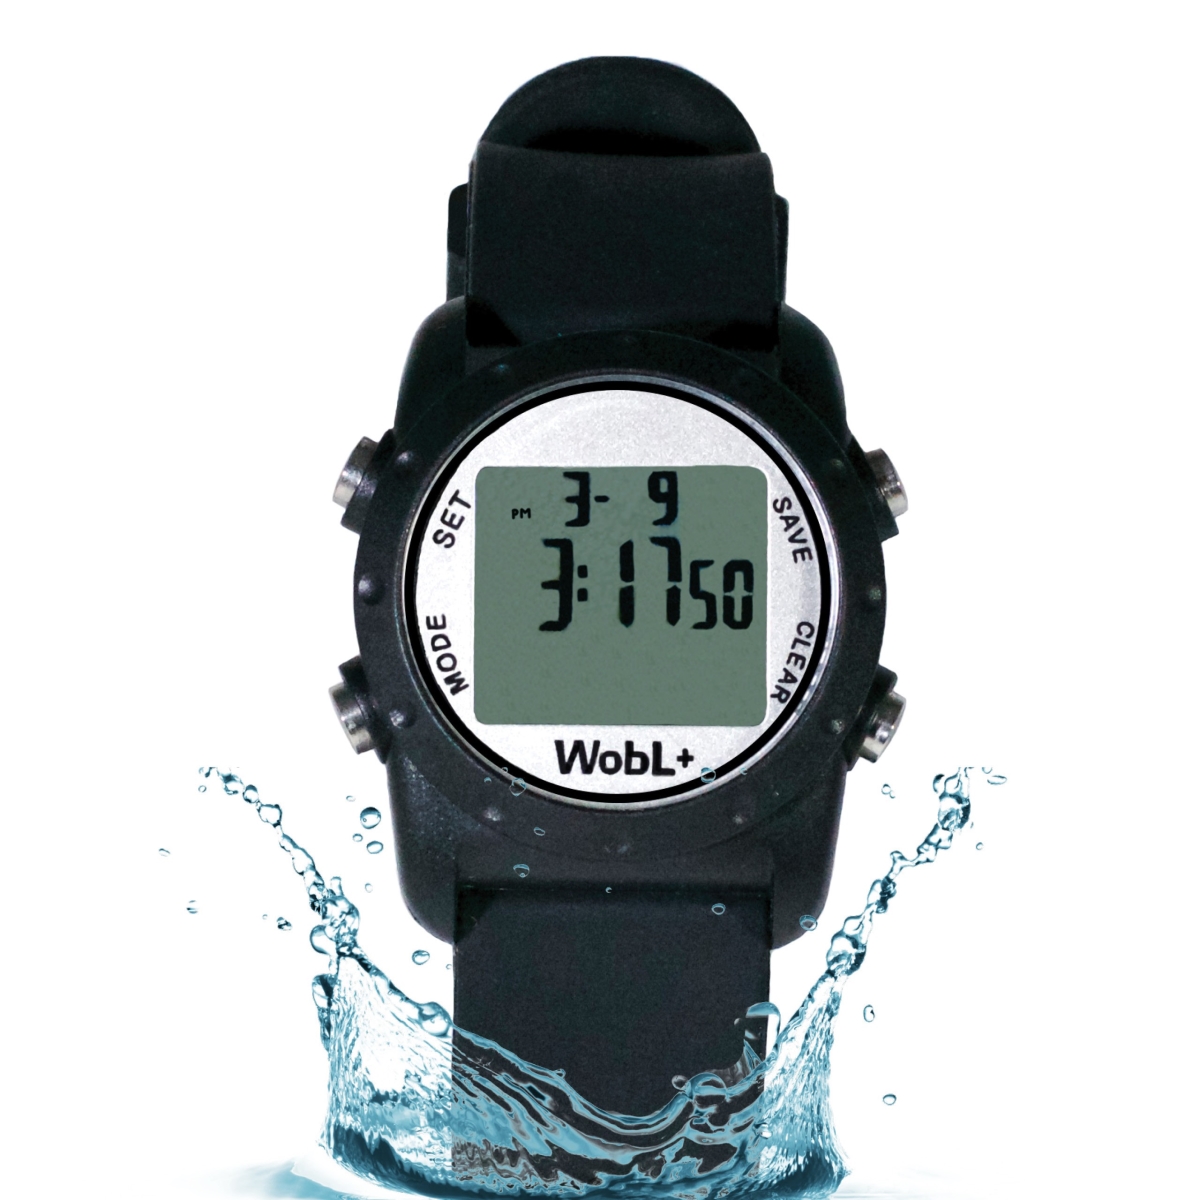 Hc-wobl Plus Bk Wobl & Vibrating Watch - Black